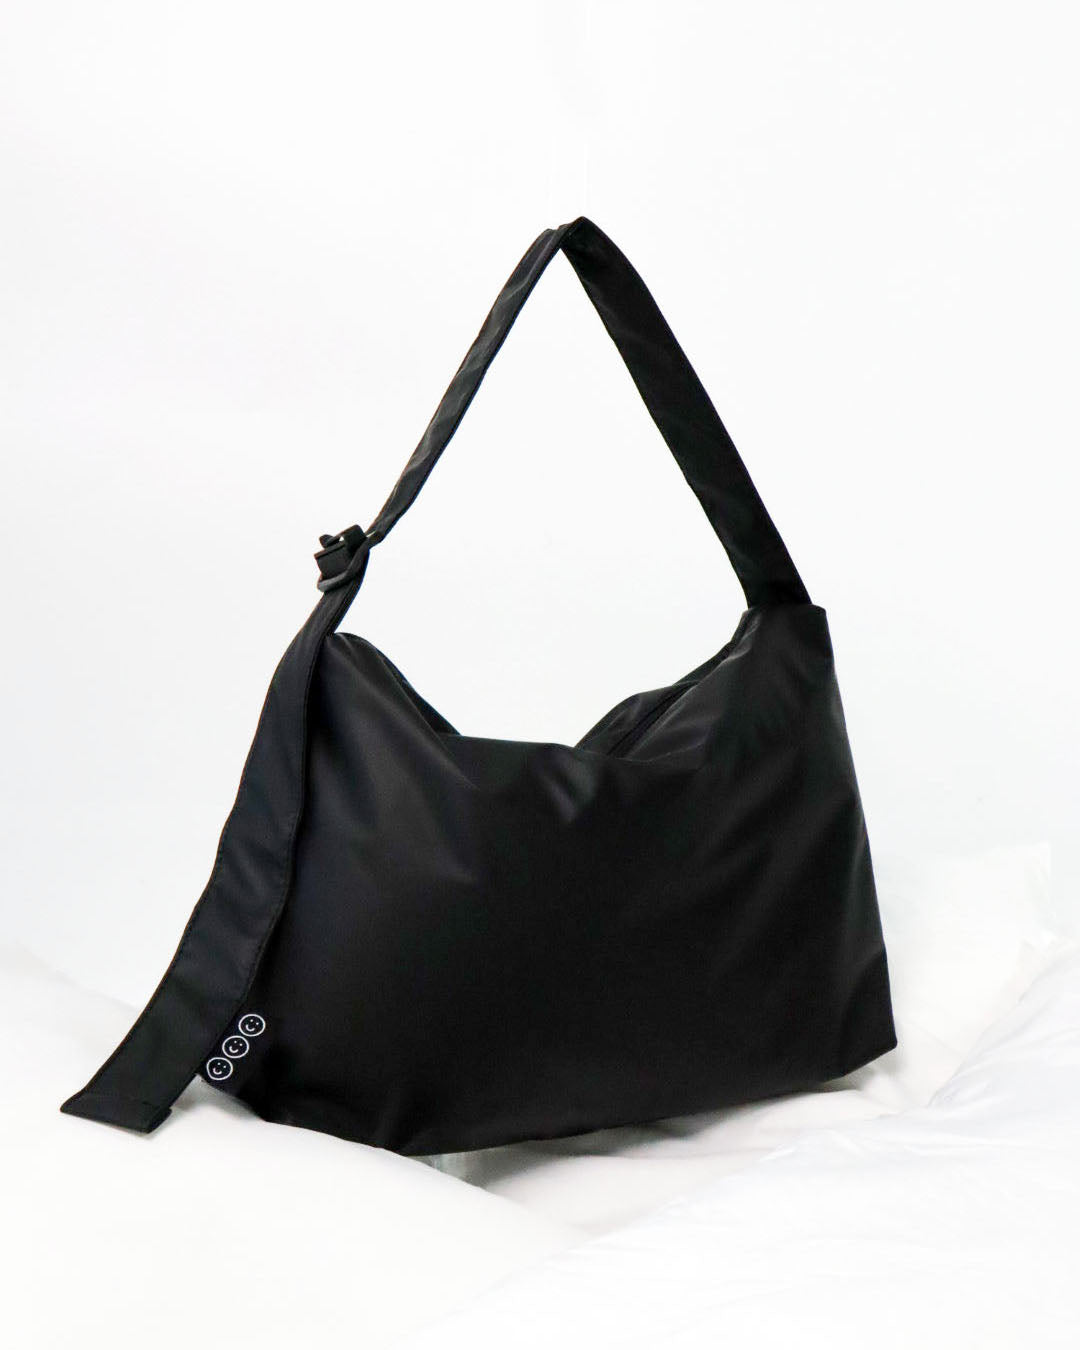 Signature ZZZ Pillow Sling/Shoulder Bag in Matte Black